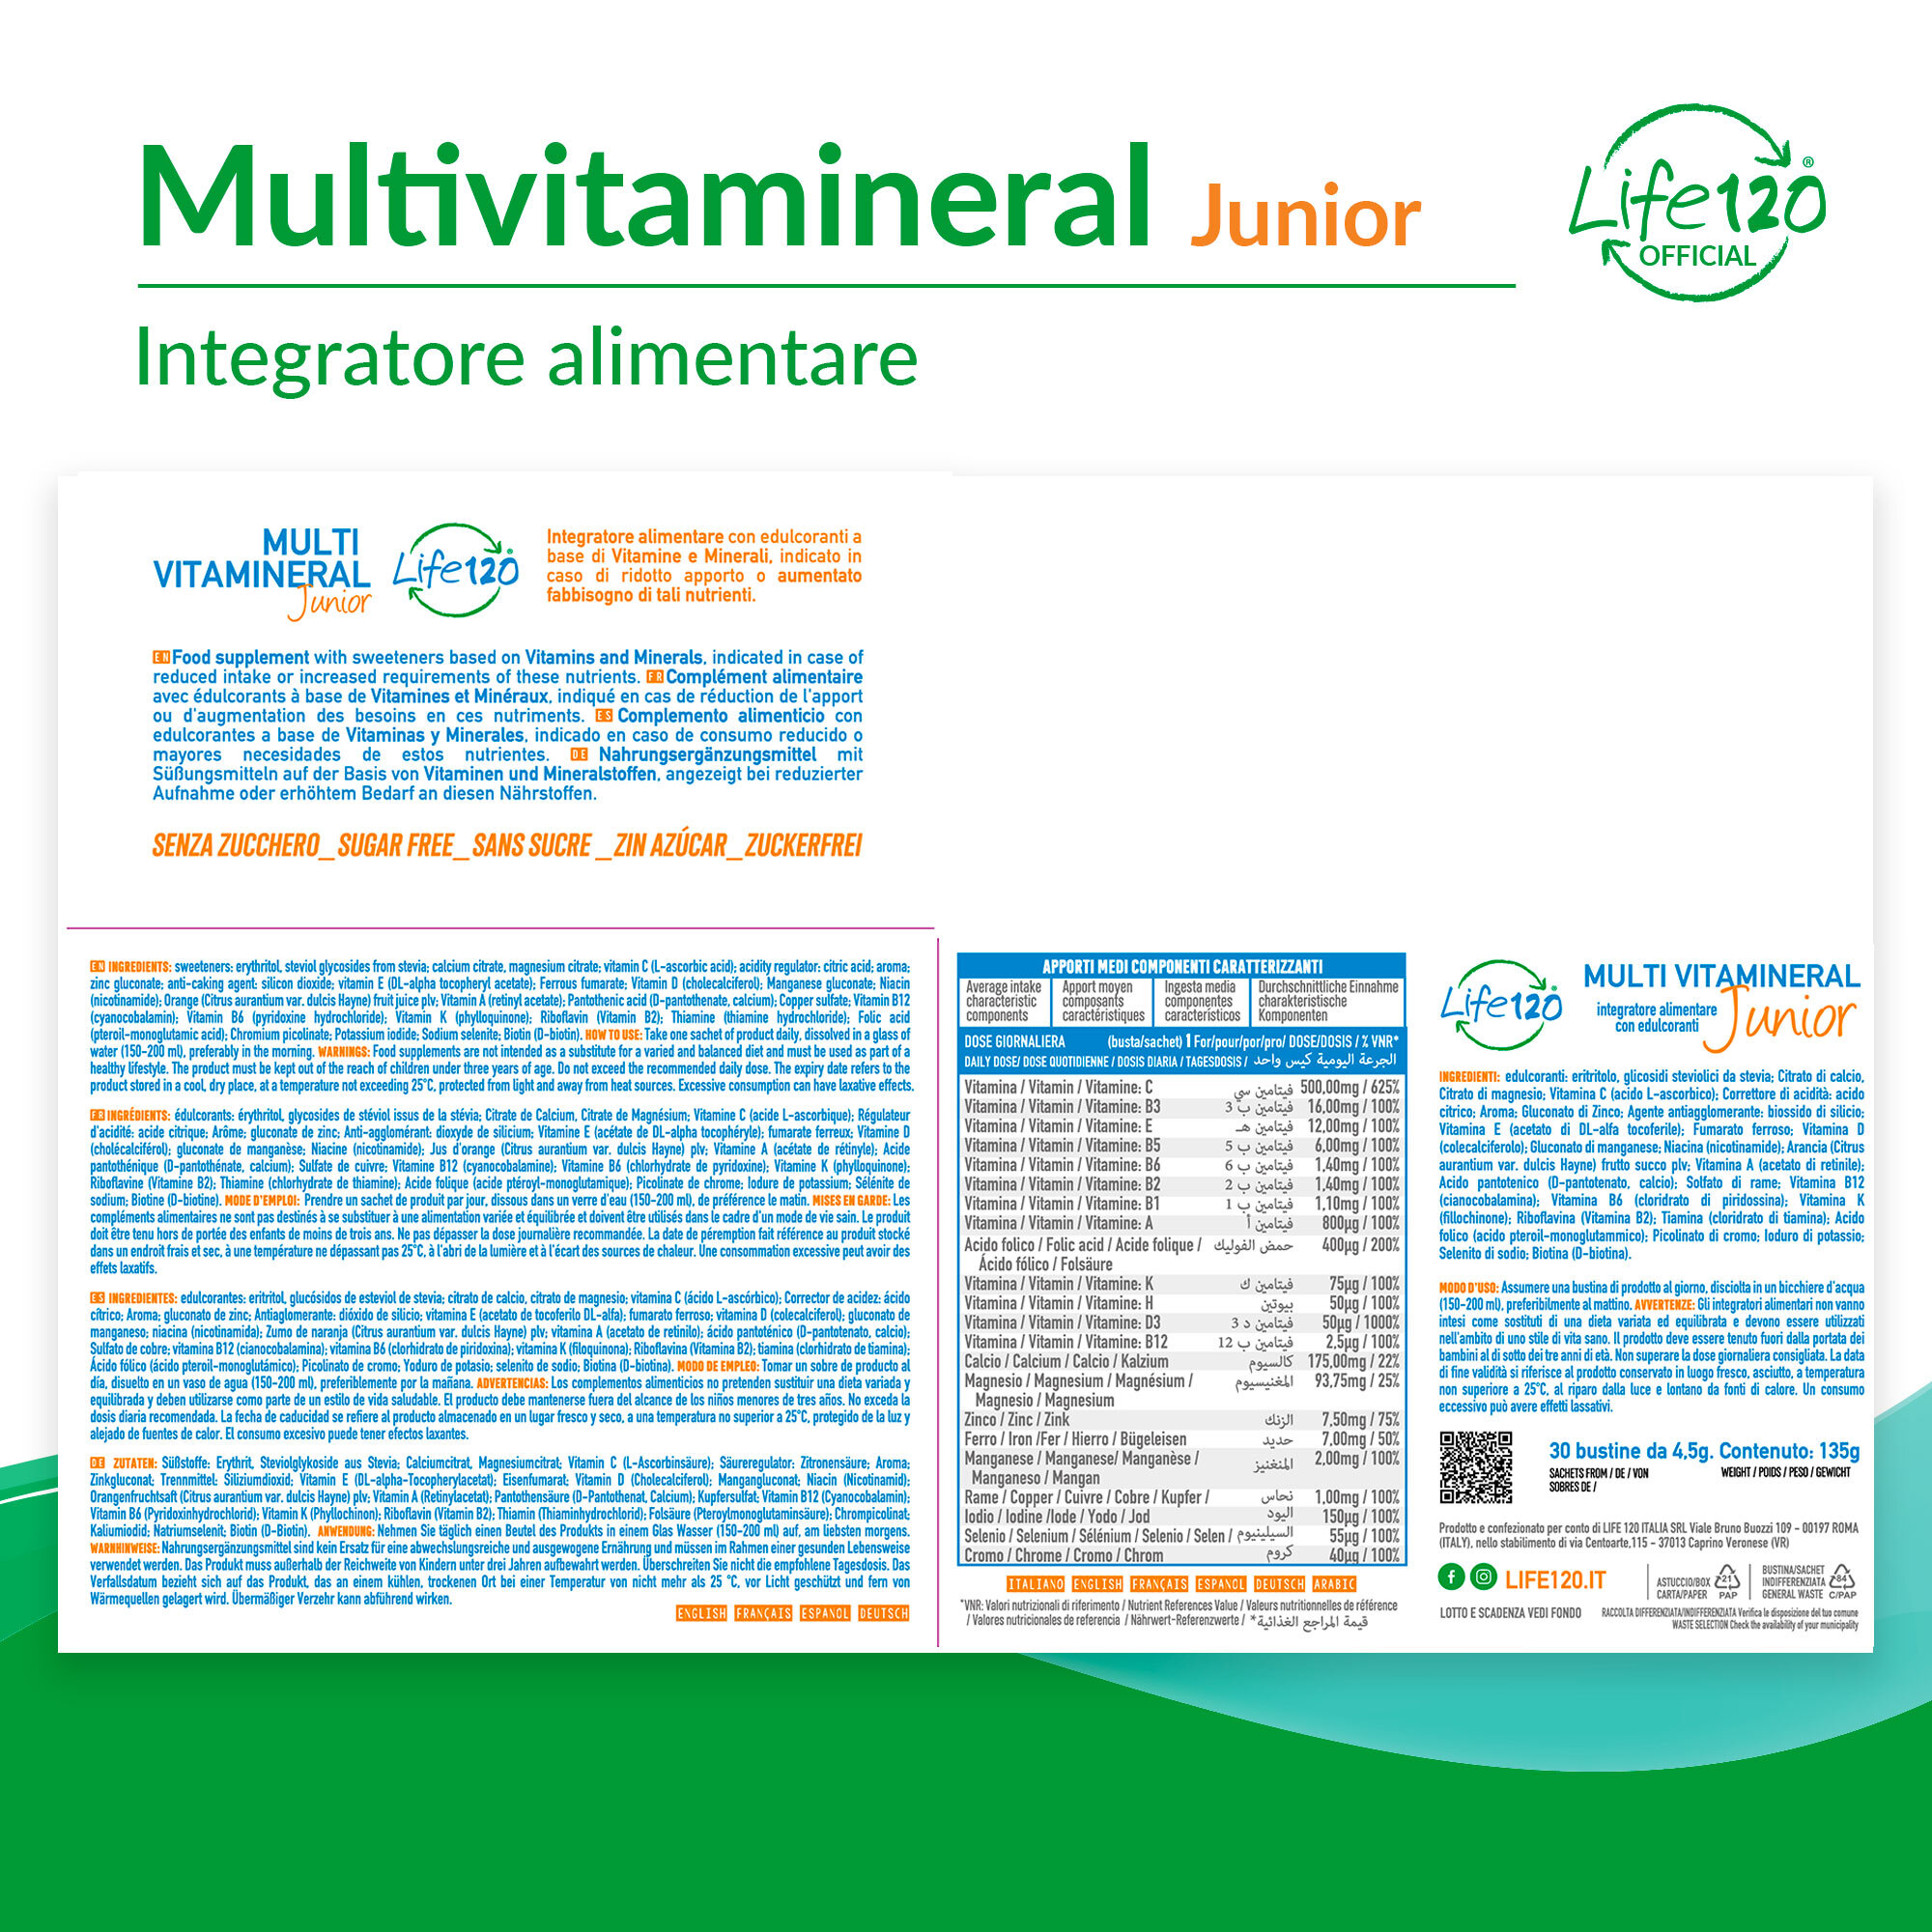 Multivitamineral Junior